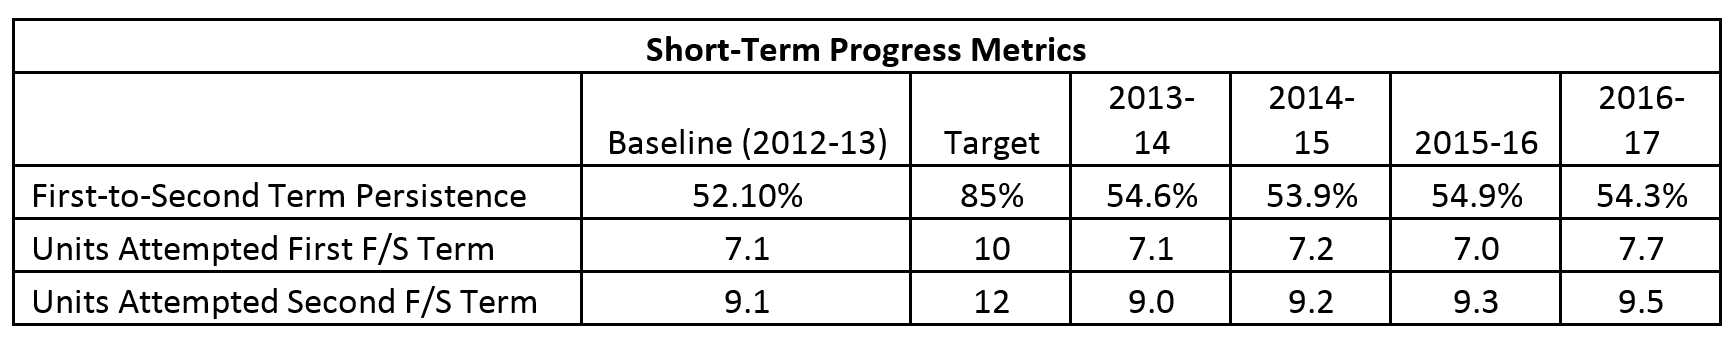 Table showing short-term progress metrics